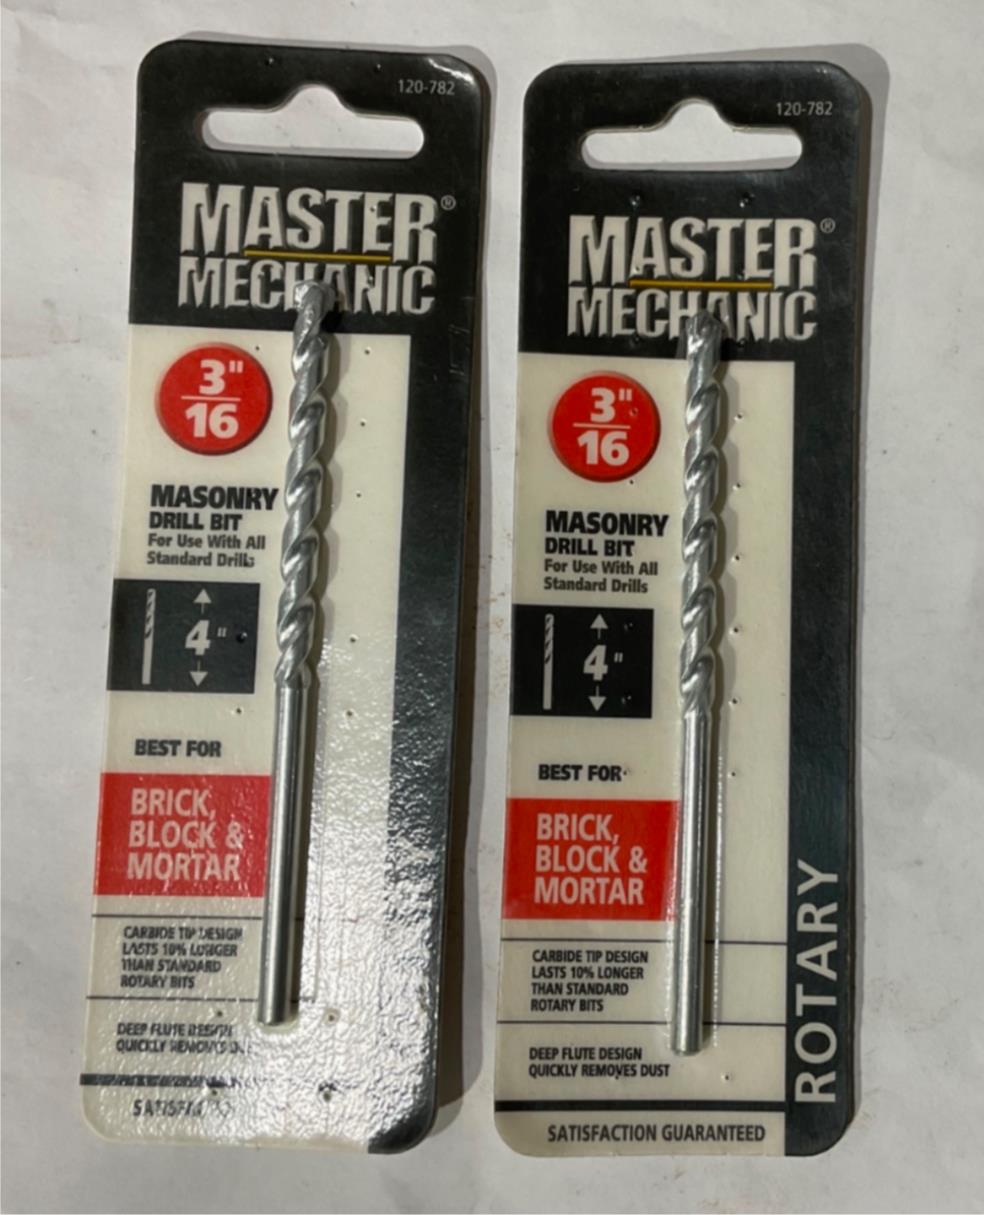 Master Mechanic 120 782 3/16" Masonry 4" Carbide Tip Rotary Drill Bit